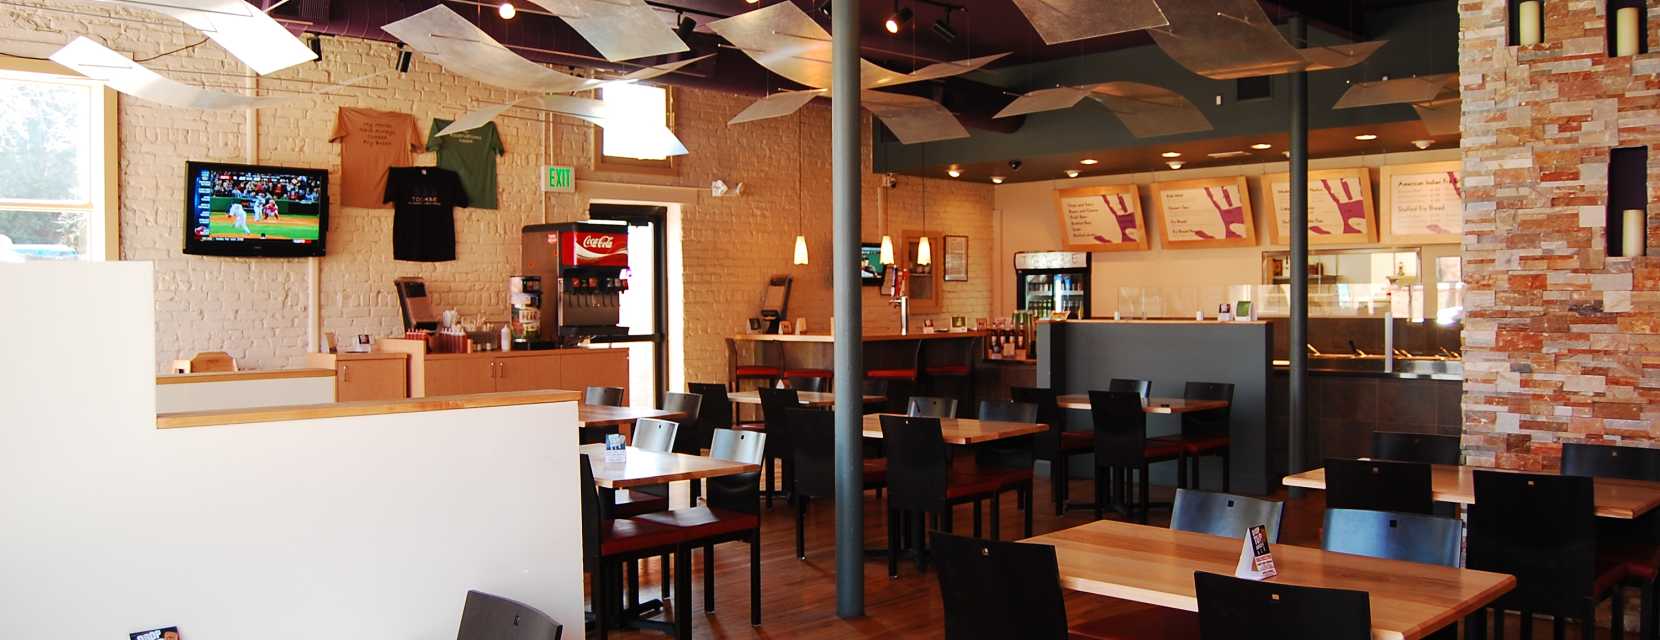 Tocabe restaurant in Denver, Colorado